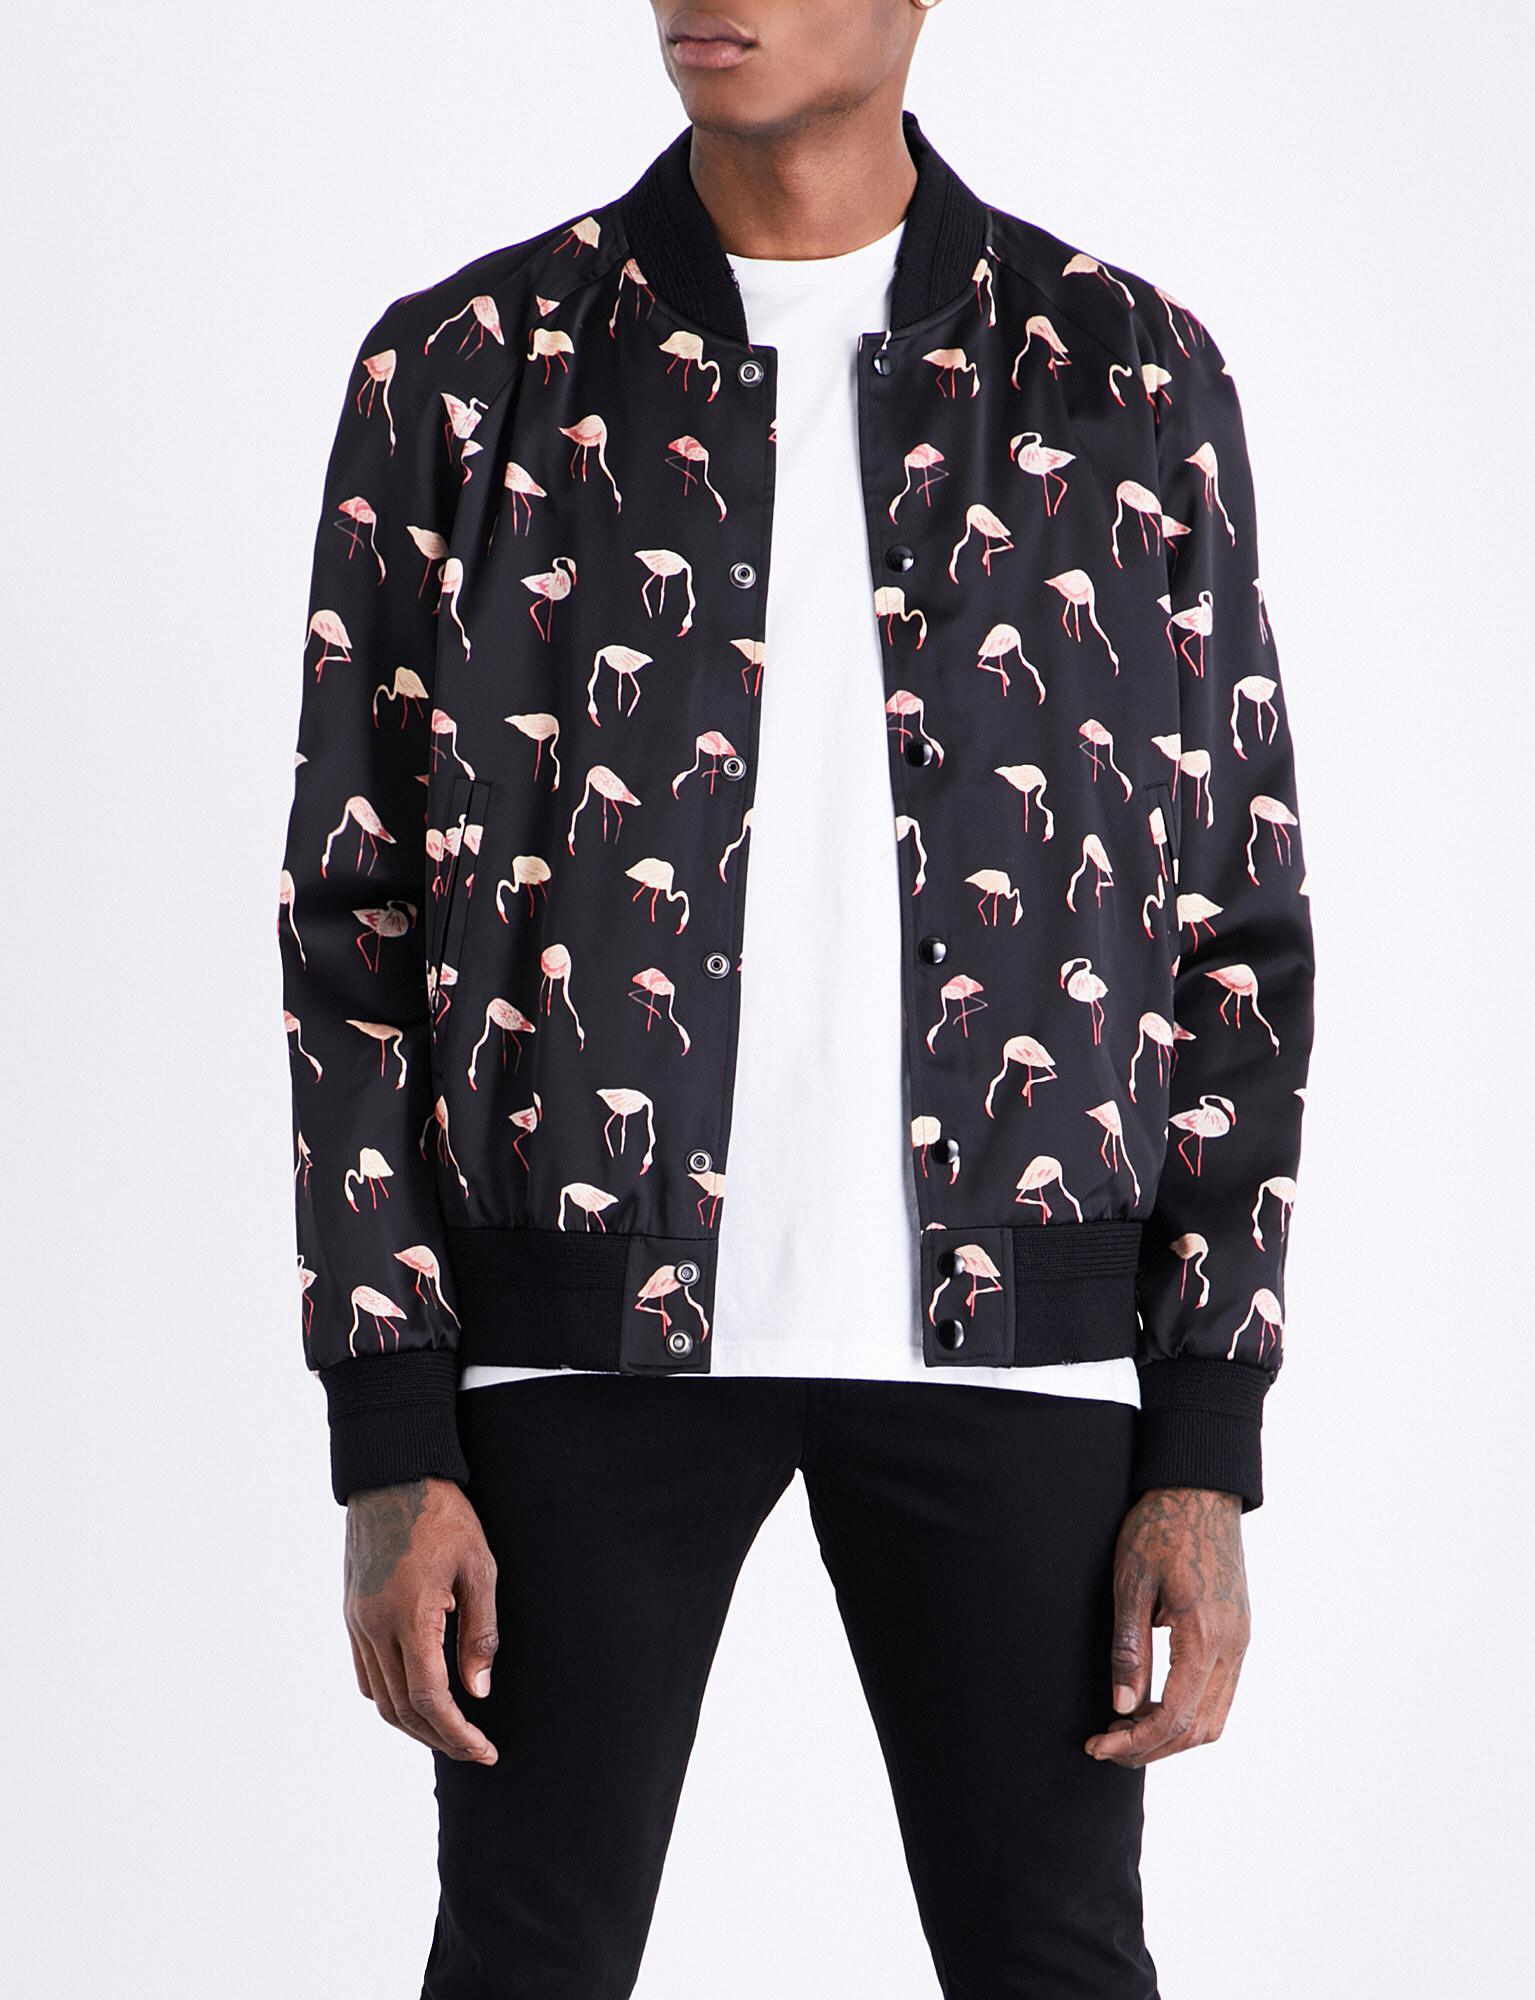 Saint Laurent Pink Flamingo Print Bomber Jacket in Black for Men - Lyst